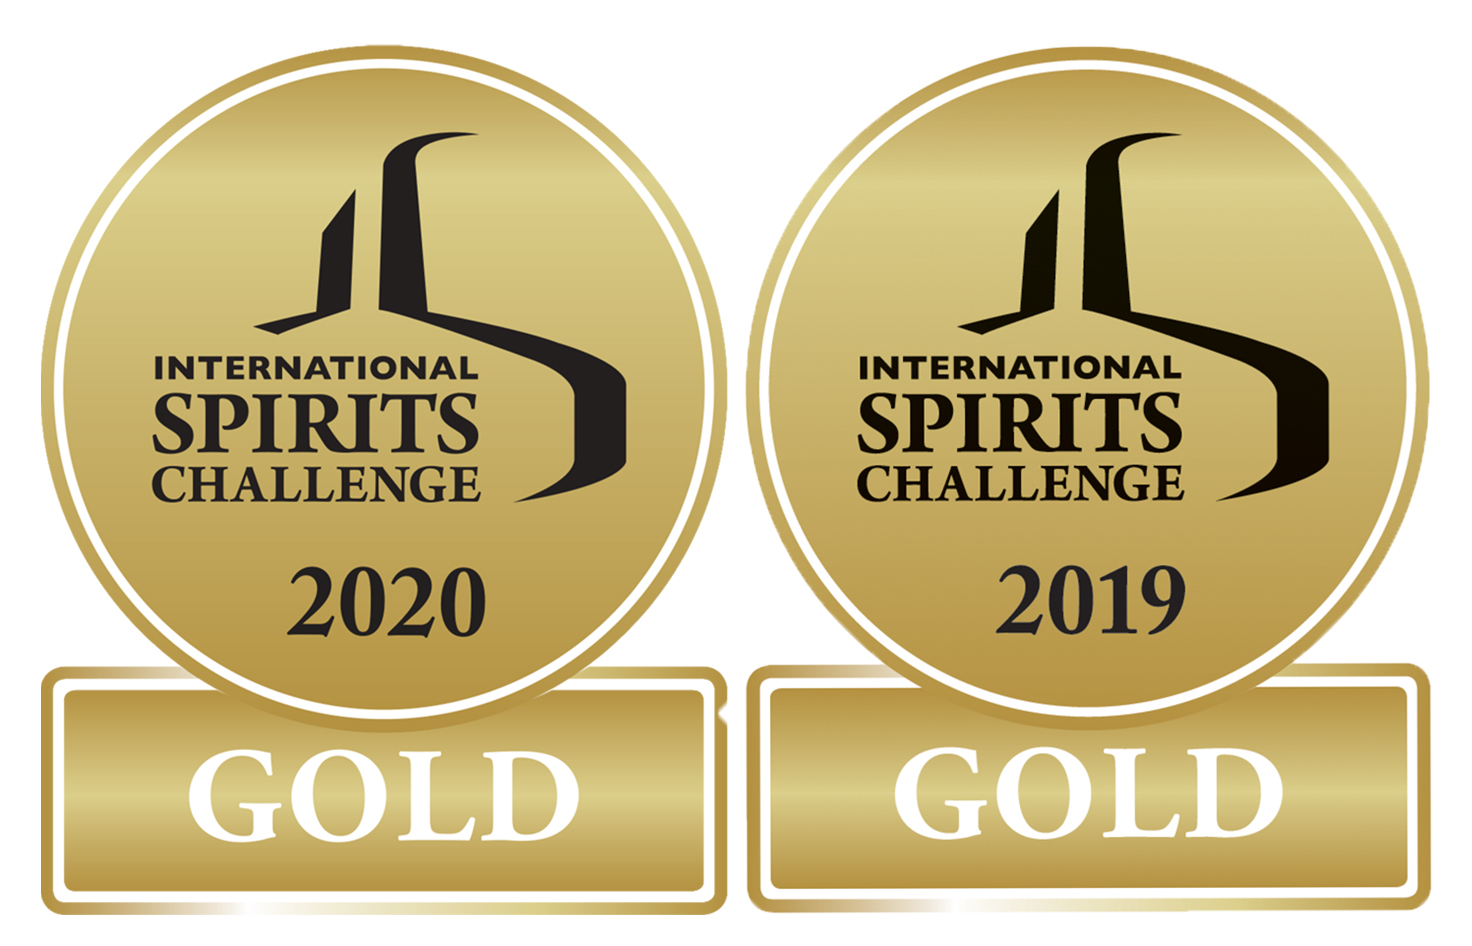 International Spirits challenge 2020. Gold. International Spirits challenge 2019. Gold.